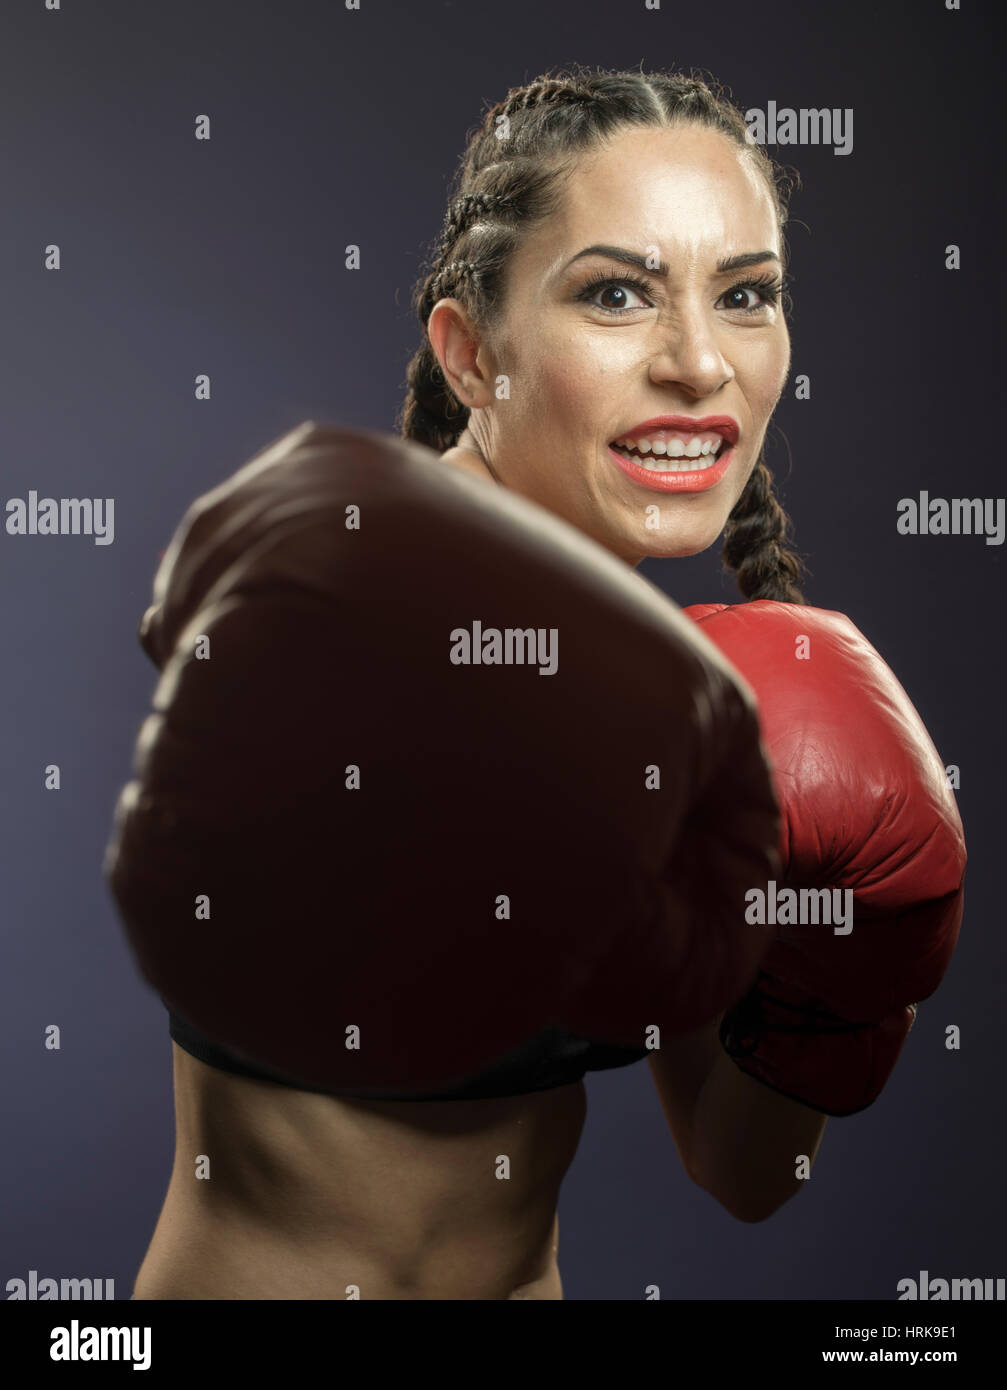 Boxerin mit roten Handschuhen Stockfoto